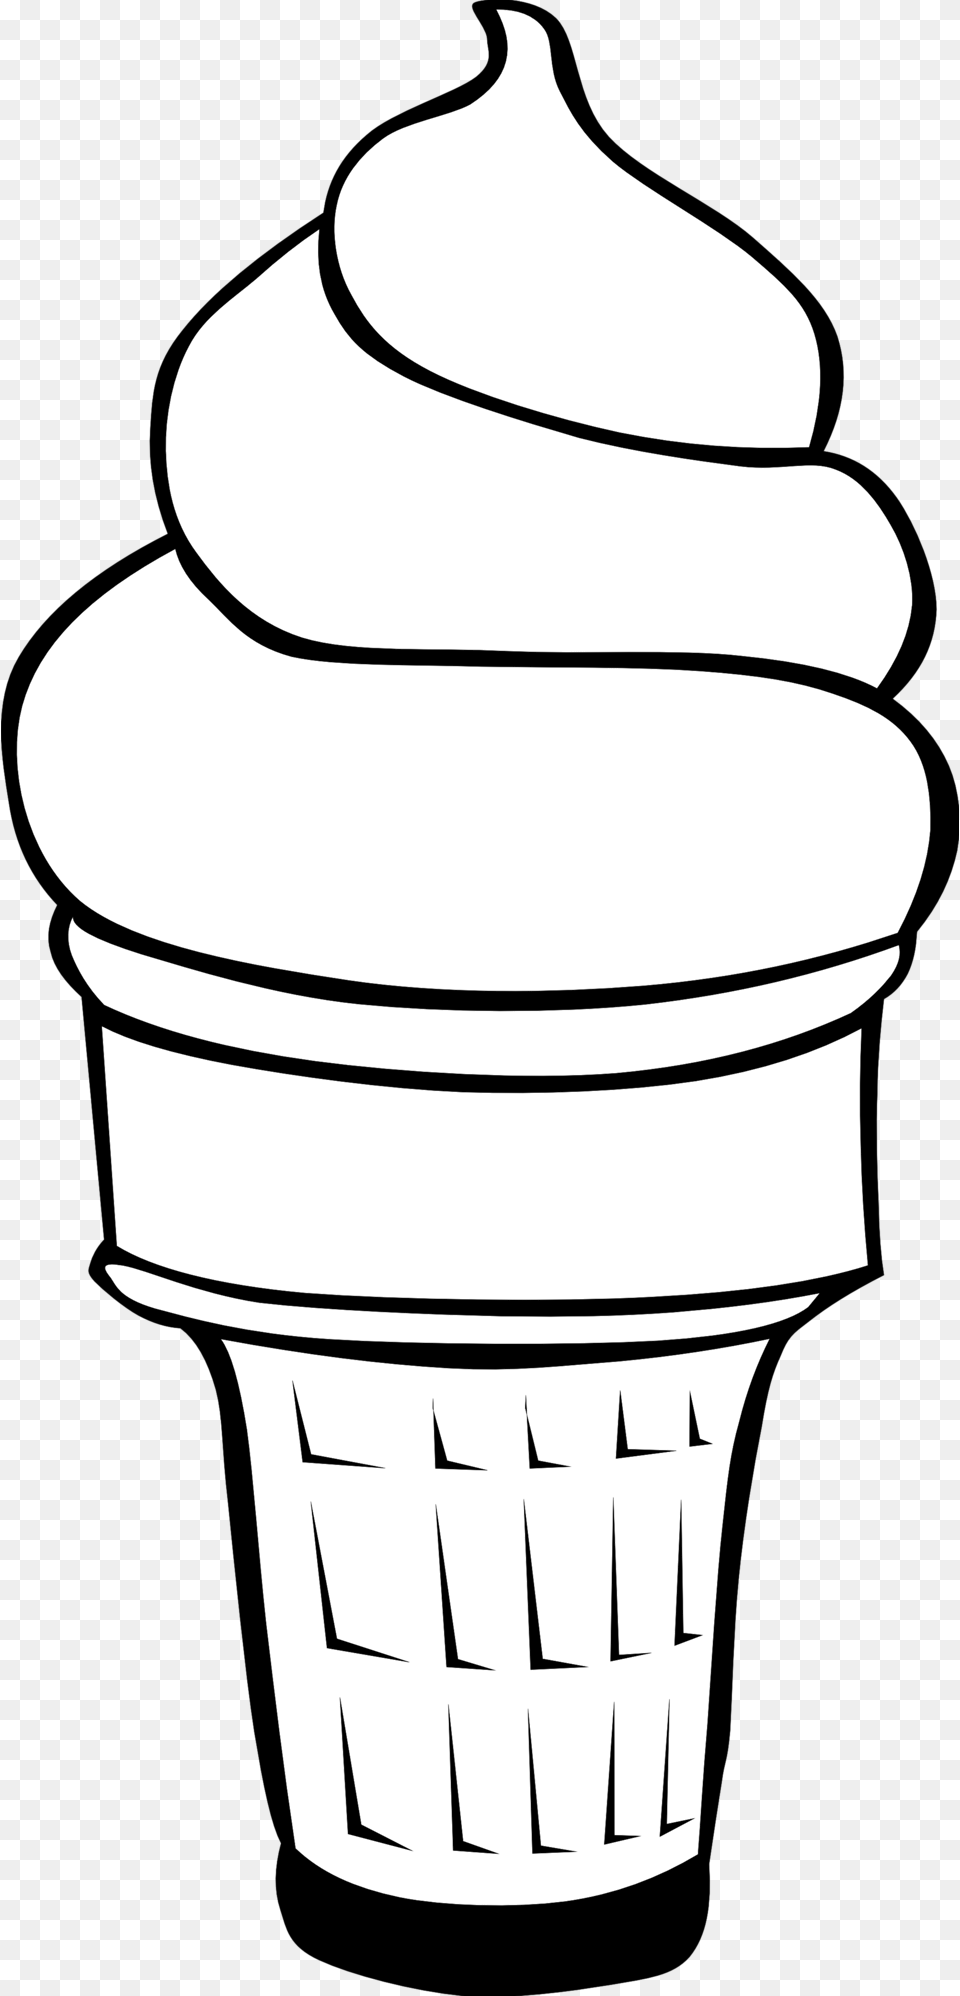 Fast Food Desserts Ice Cream Cones Soft Serve Graphics, Dessert, Ice Cream Png Image